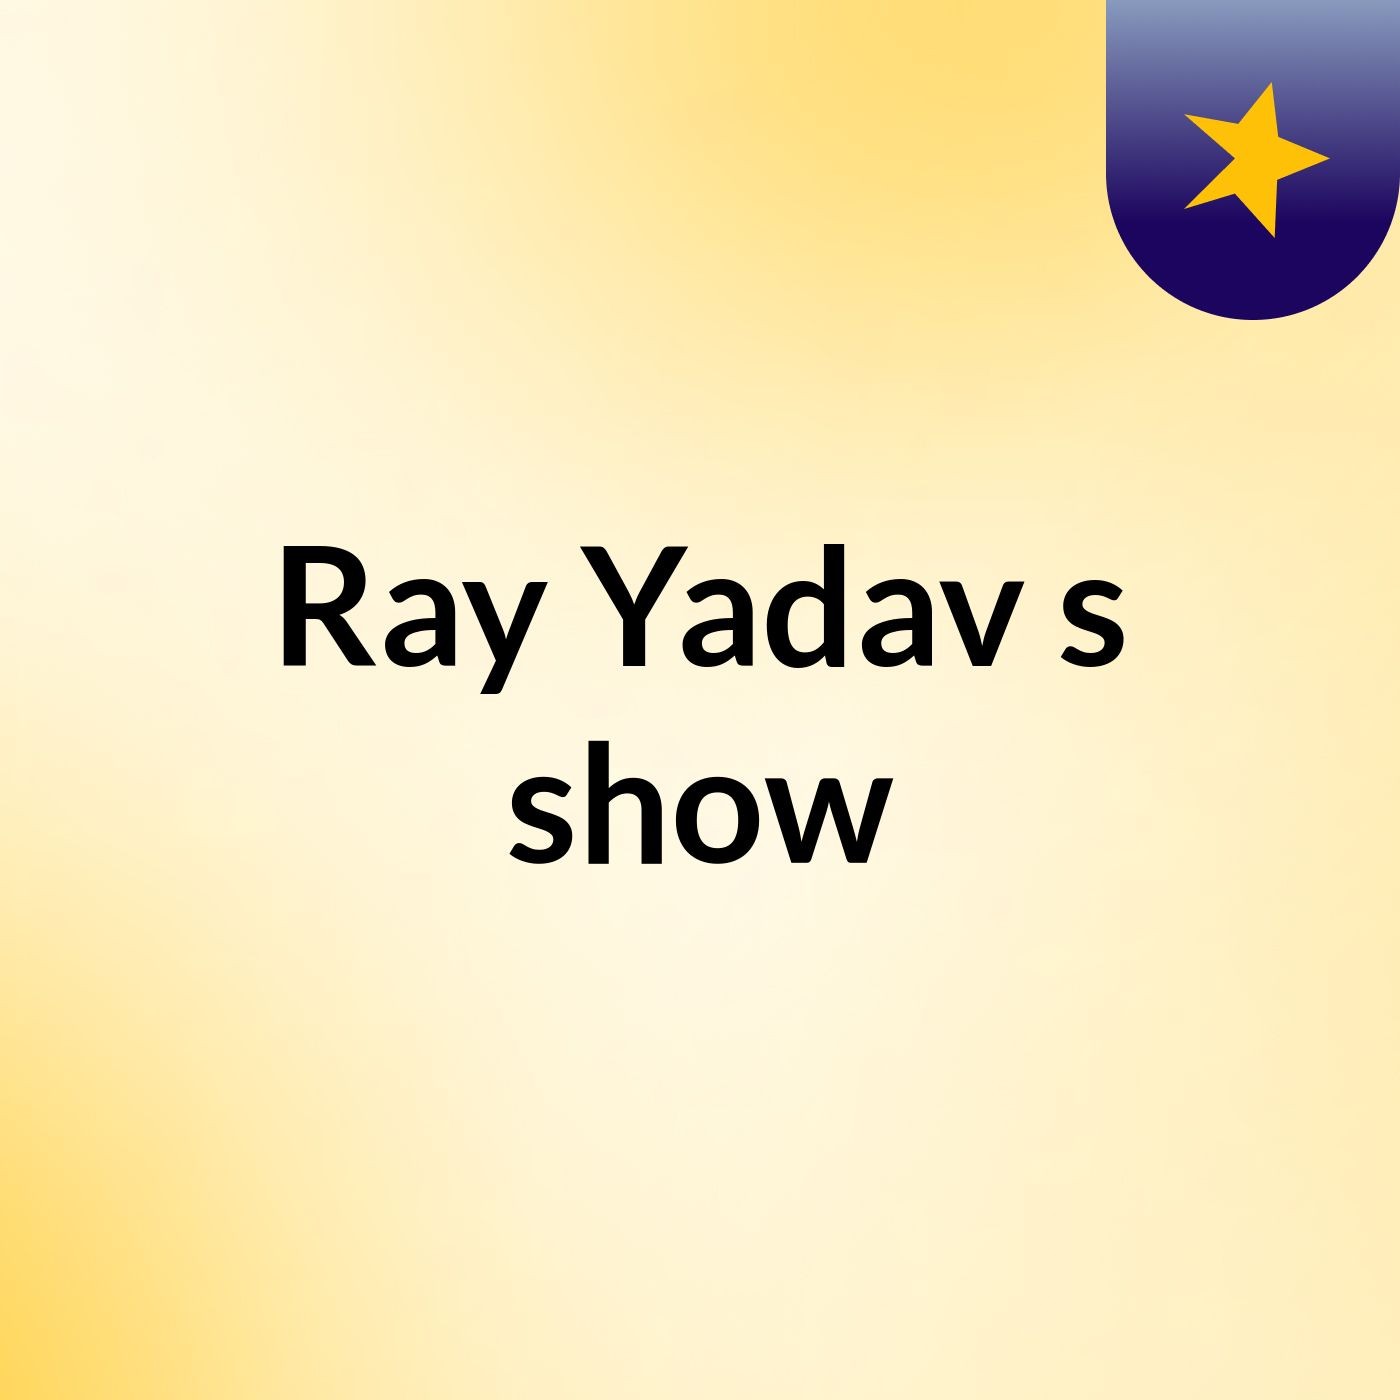 Ray Yadav's show